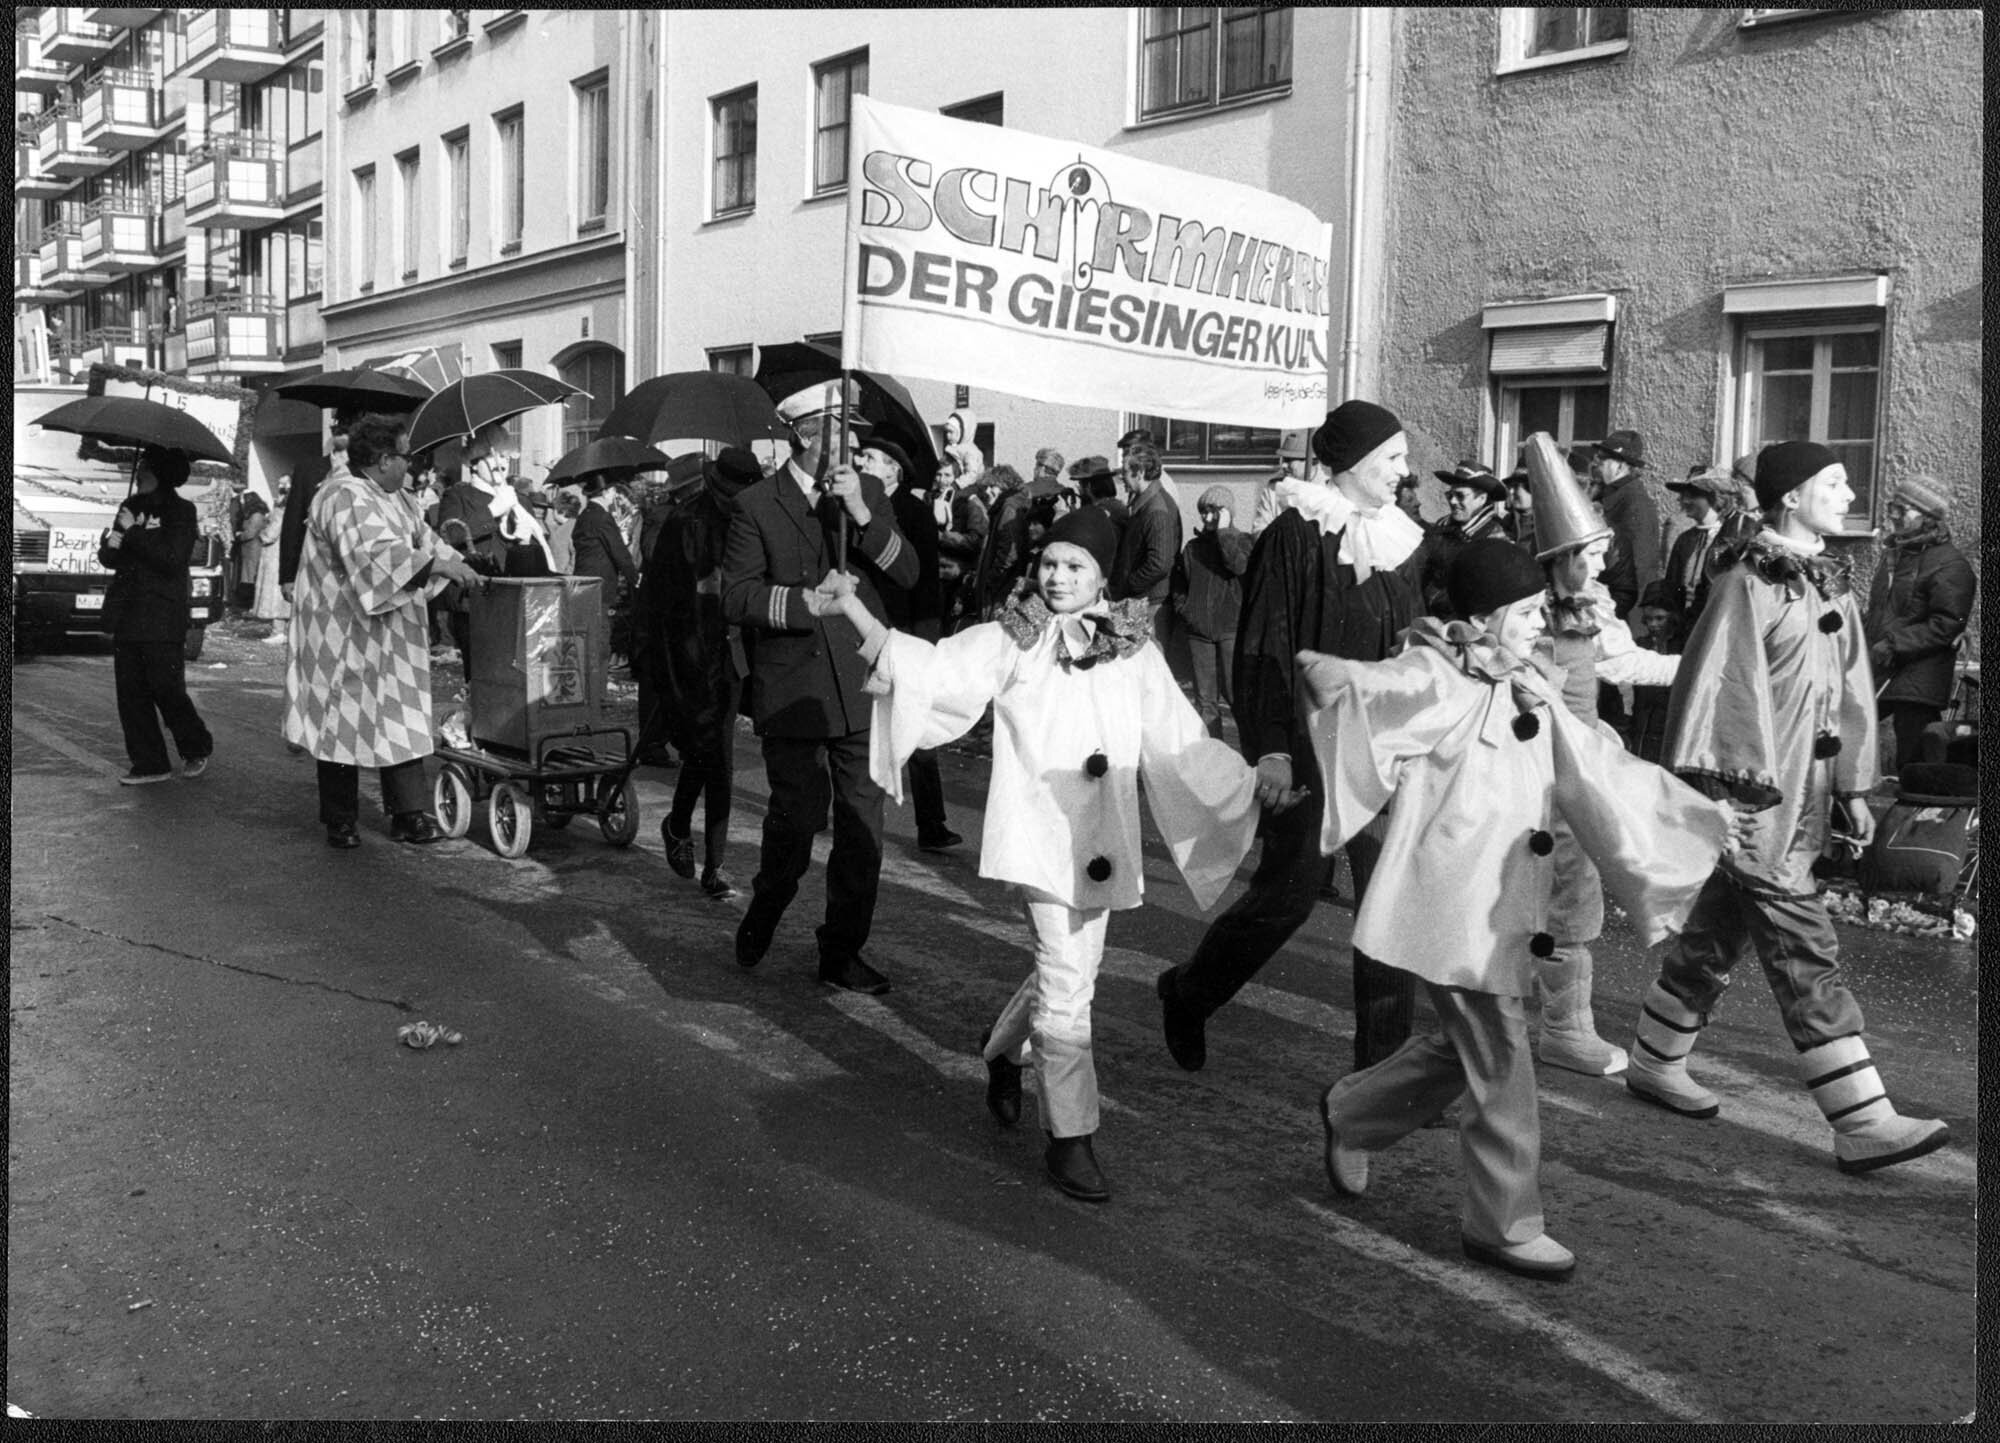 Die Freunde Giesings nehmen als „Schirmherren der Giesinger Kultur“ am Zug teil 1992. 